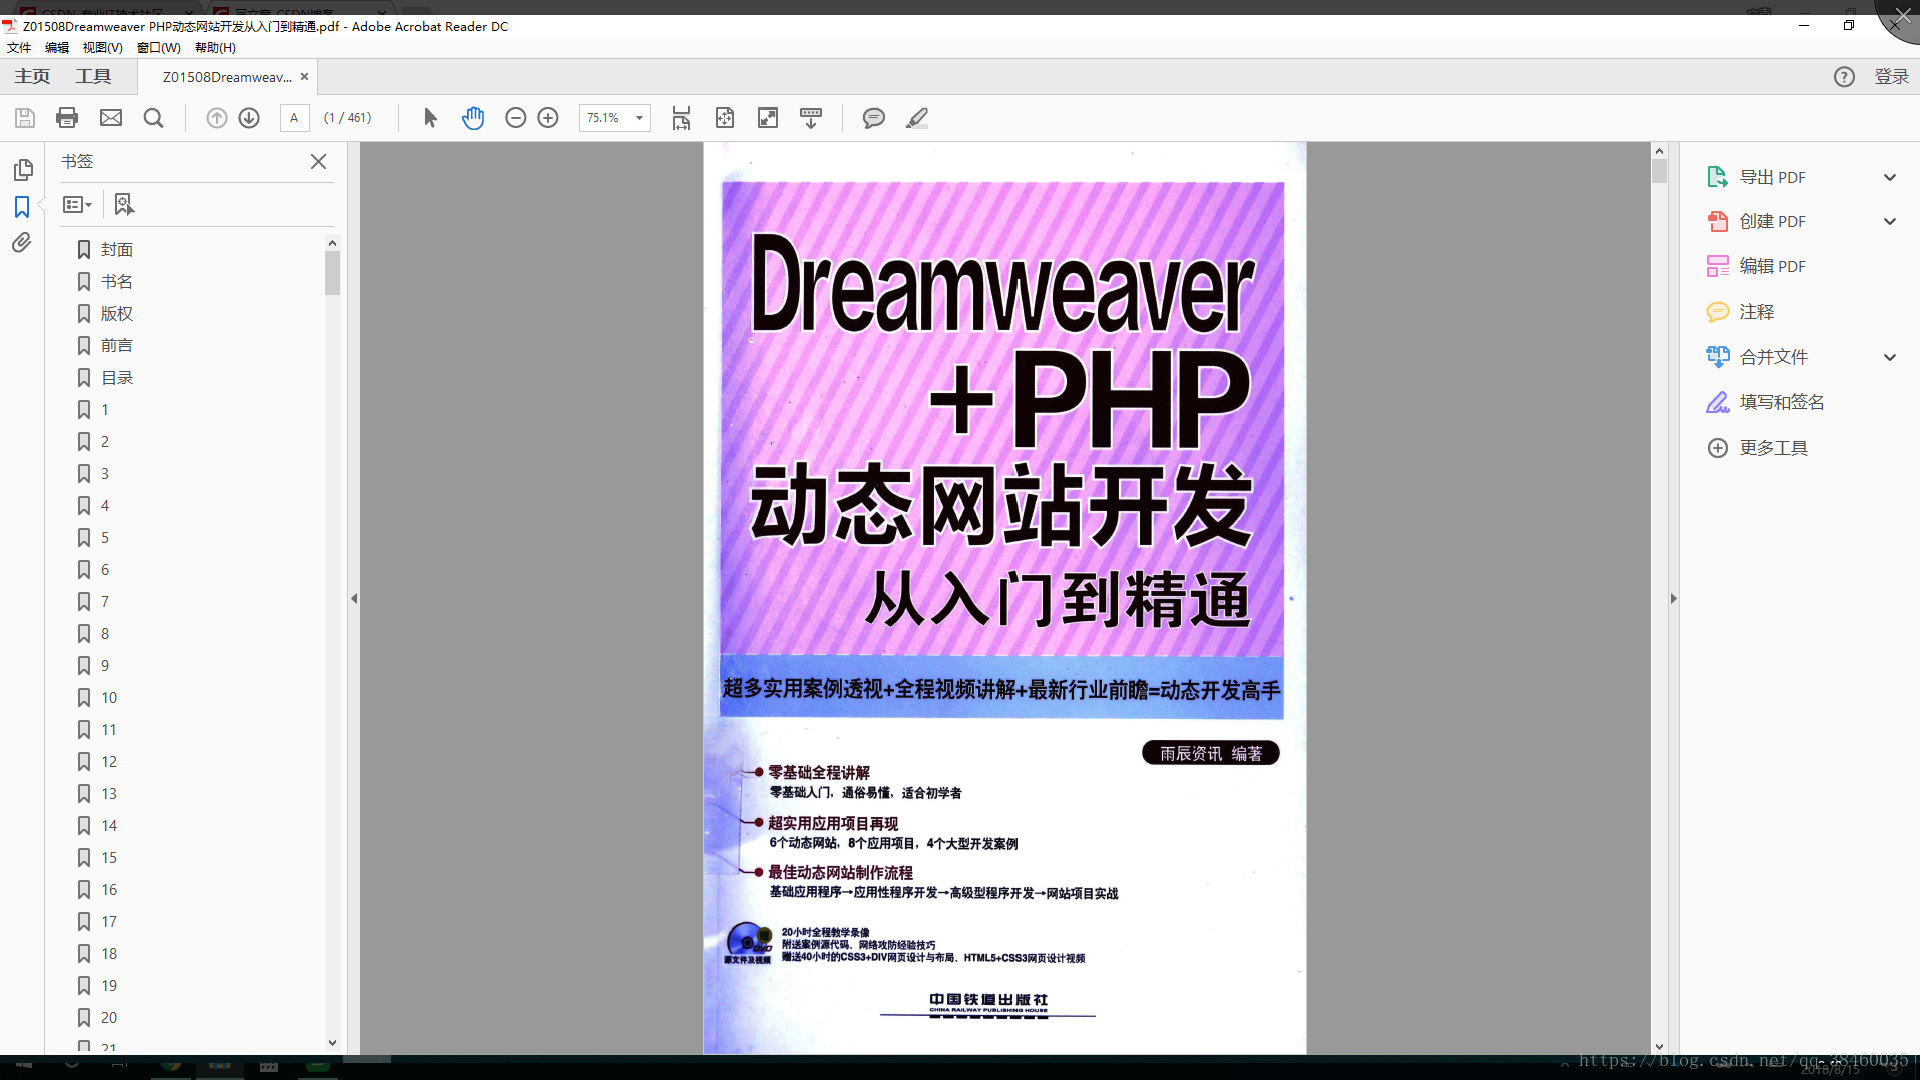 Dreamweaver PHP动态网站开发从入门到精通pdf